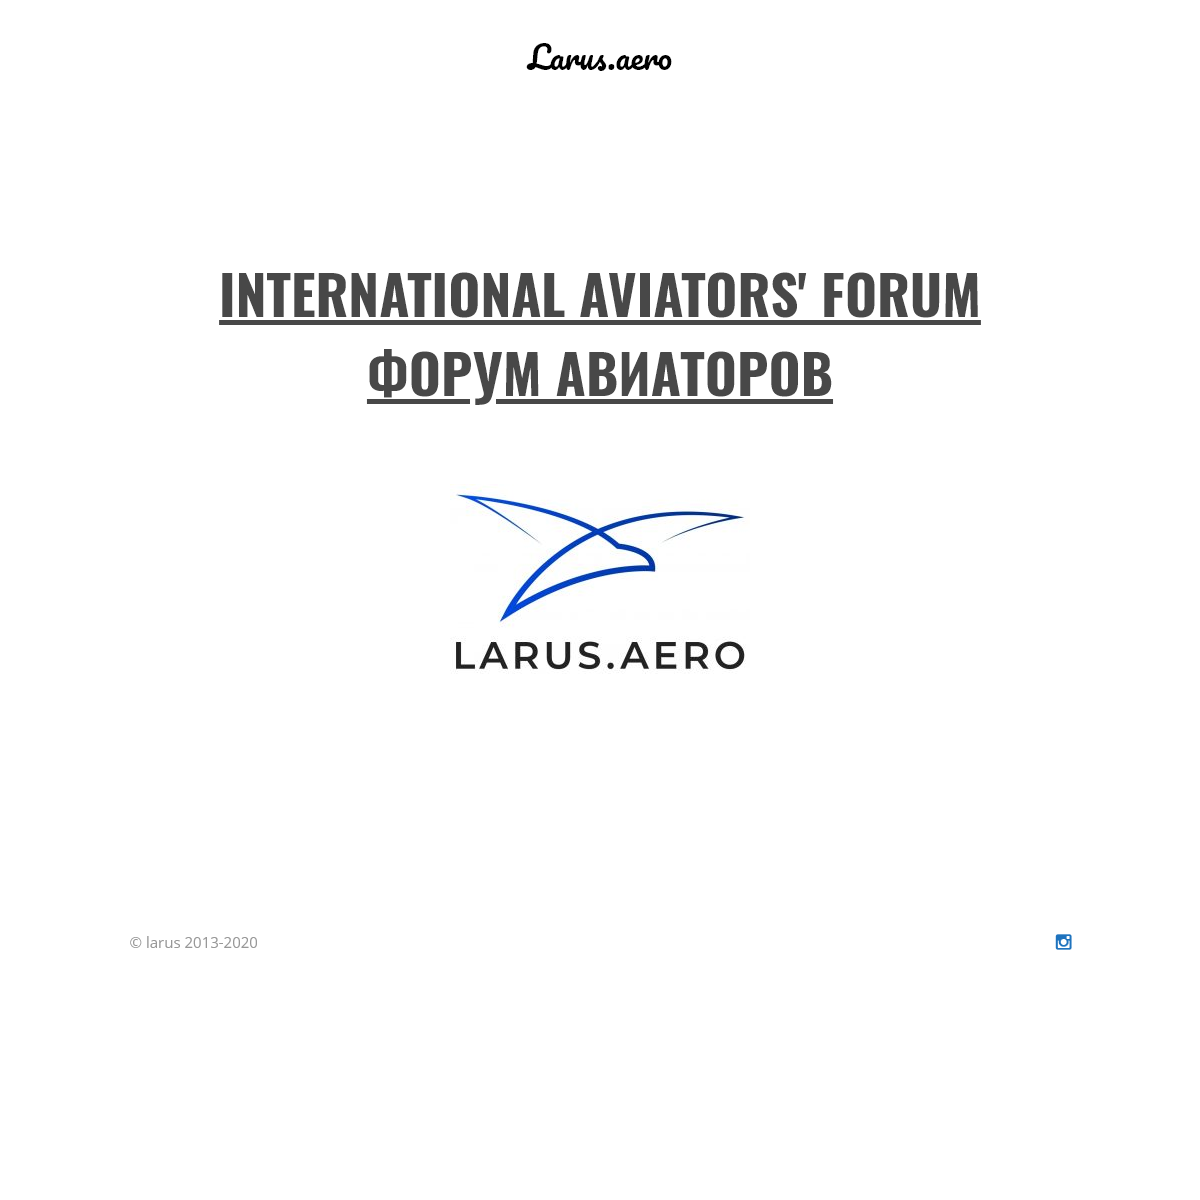 A complete backup of larus.aero